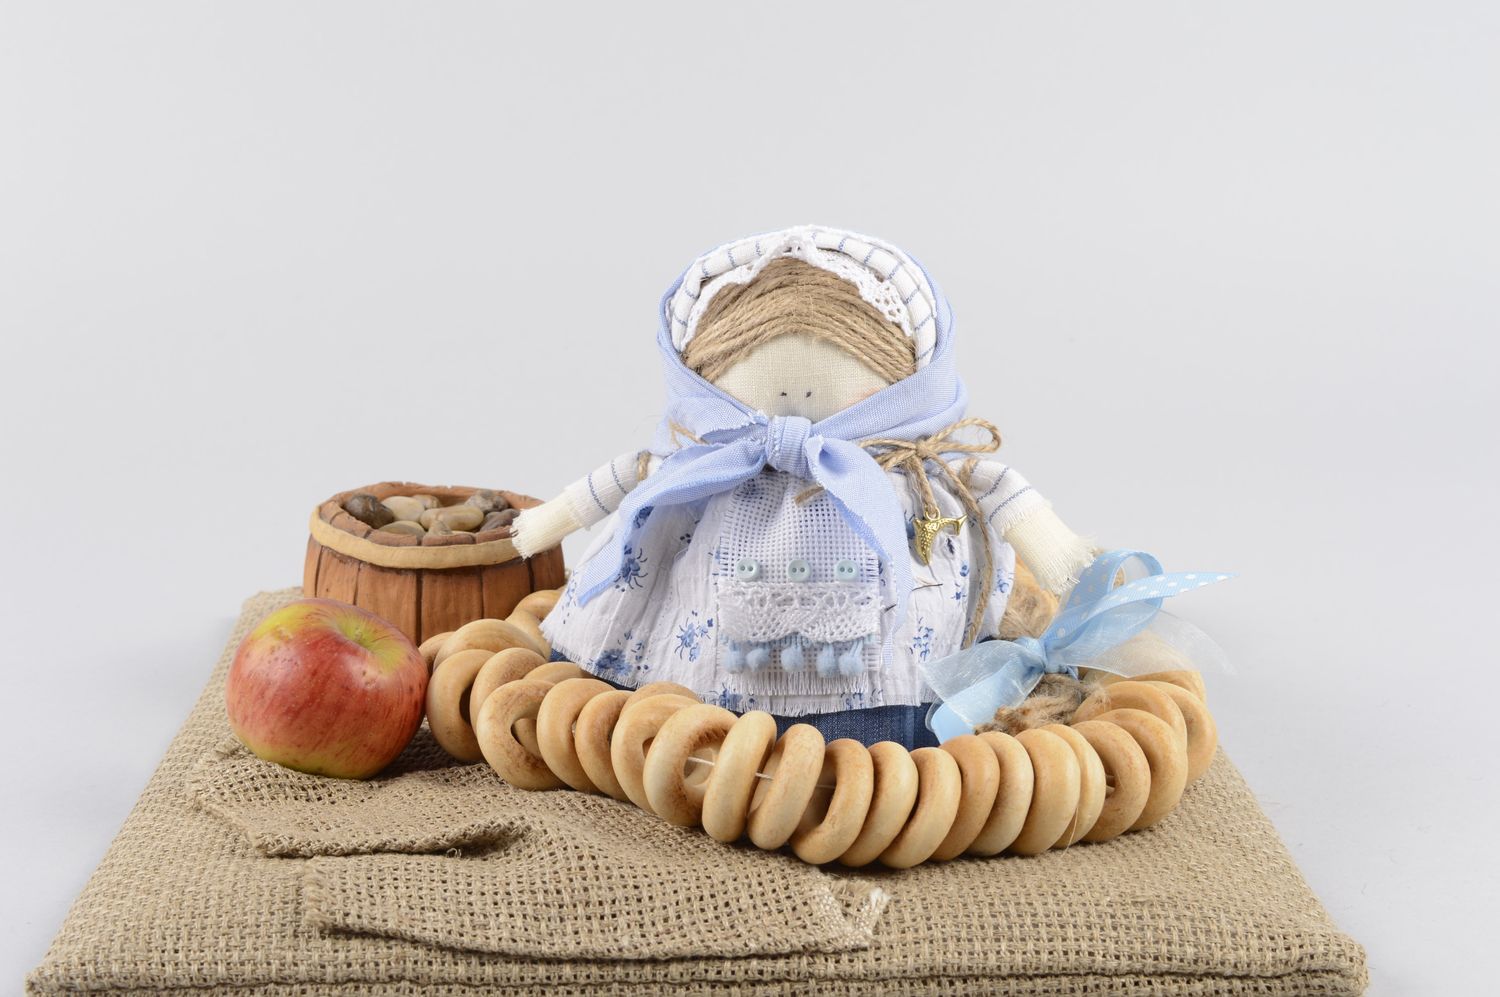 Handmade doll decorative use only nursery decor gift ideas soft doll for girls photo 5